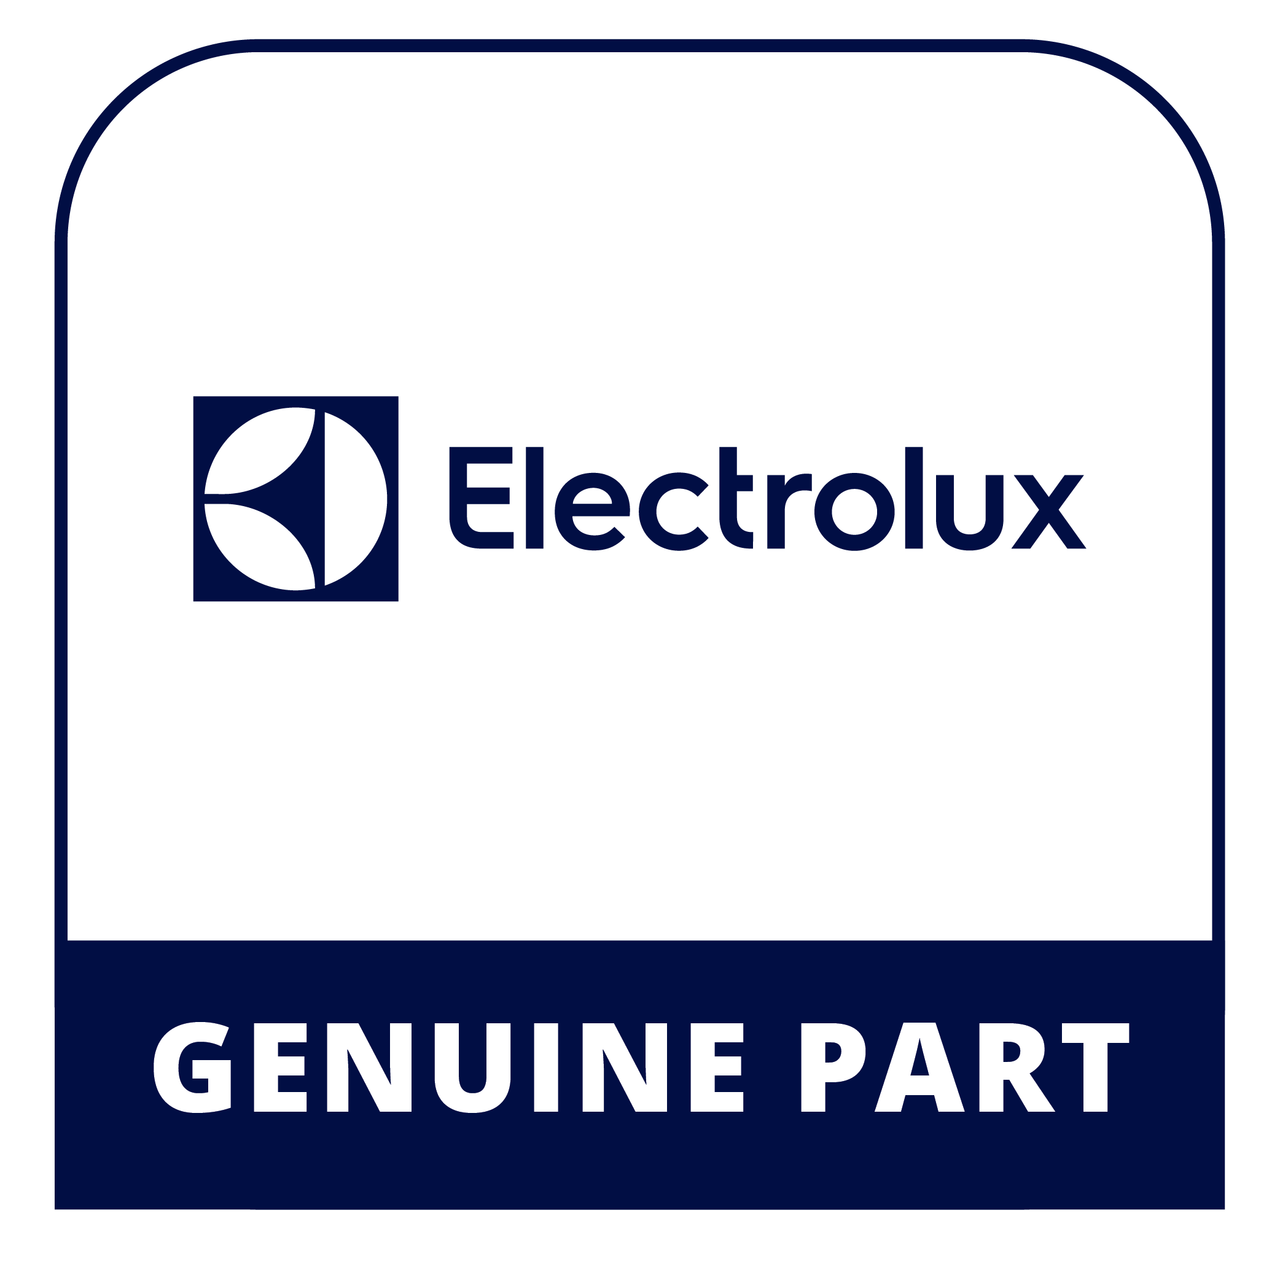 Frigidaire - Electrolux 5304529597 Handle Kit - Genuine Electrolux Part